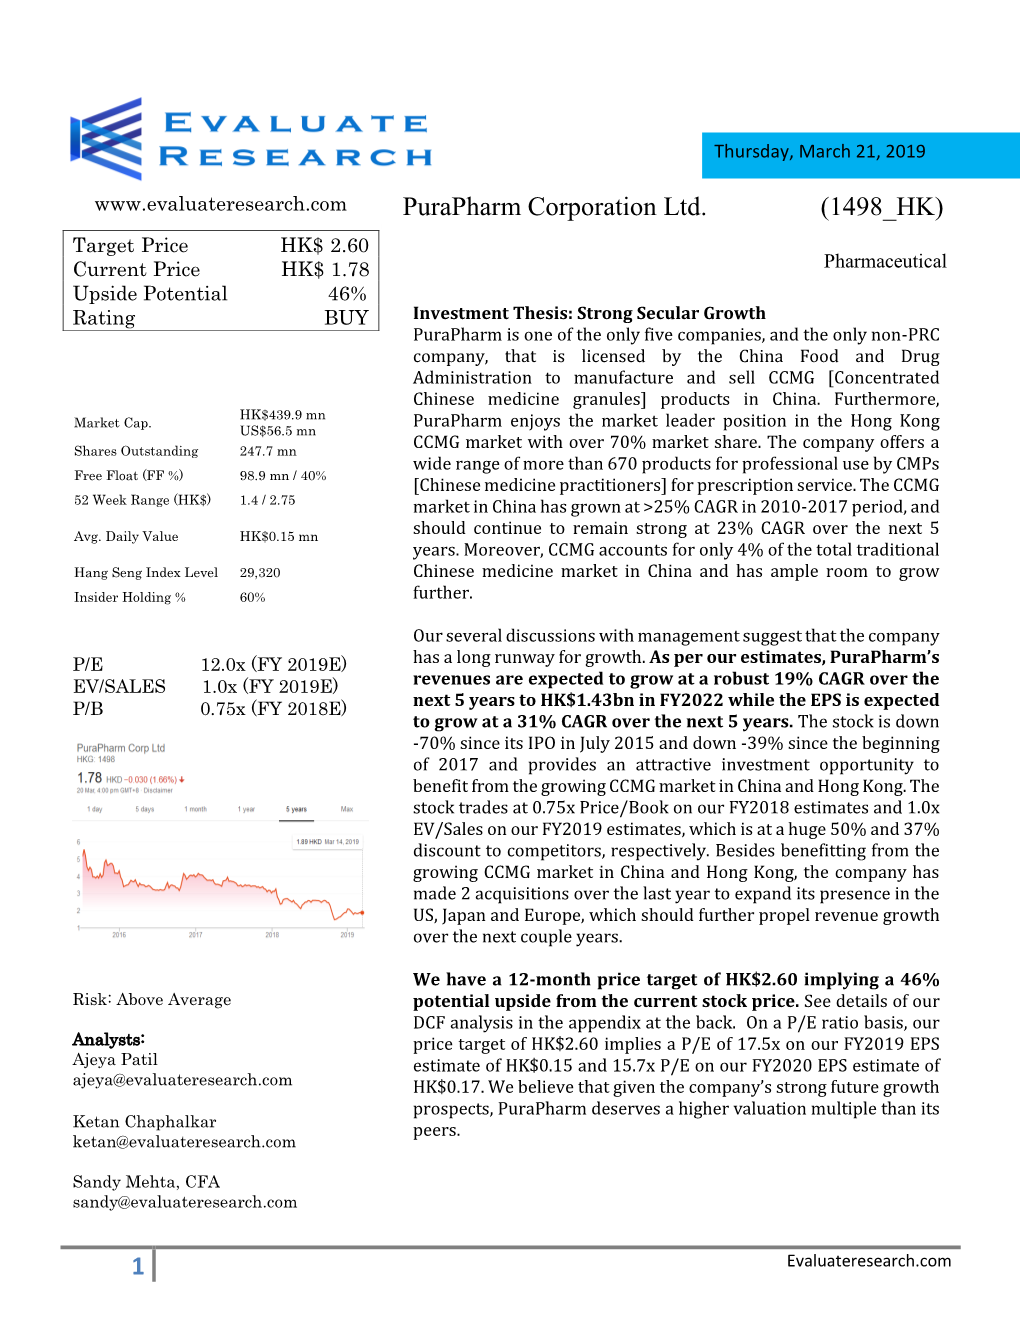 Purapharm Corporation Ltd. (1498 HK) Target Price HK$ 2.60 Current Price HK$ 1.78 Pharmaceutical